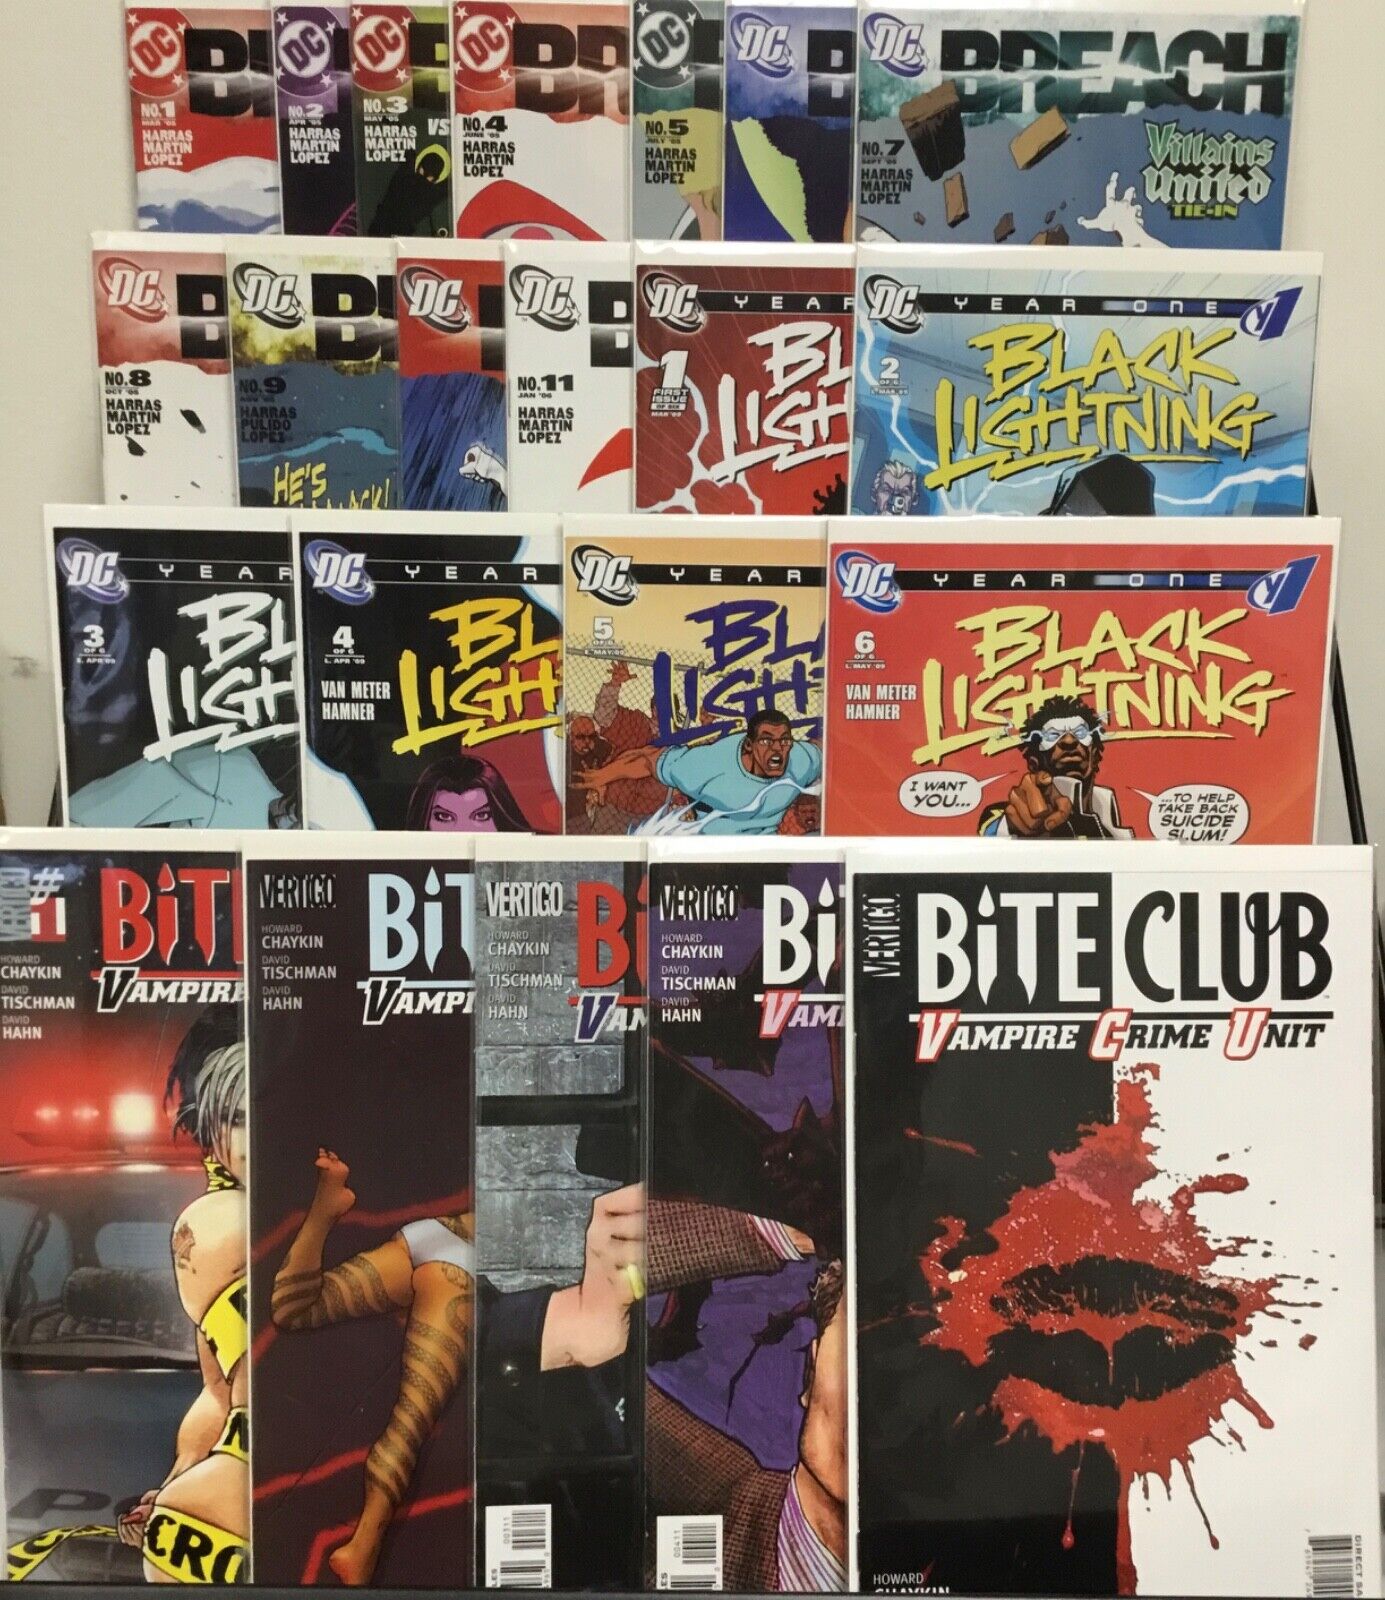 DC Comics Breach 1-11, Black Lightning 1-6, Bite Club 1-5